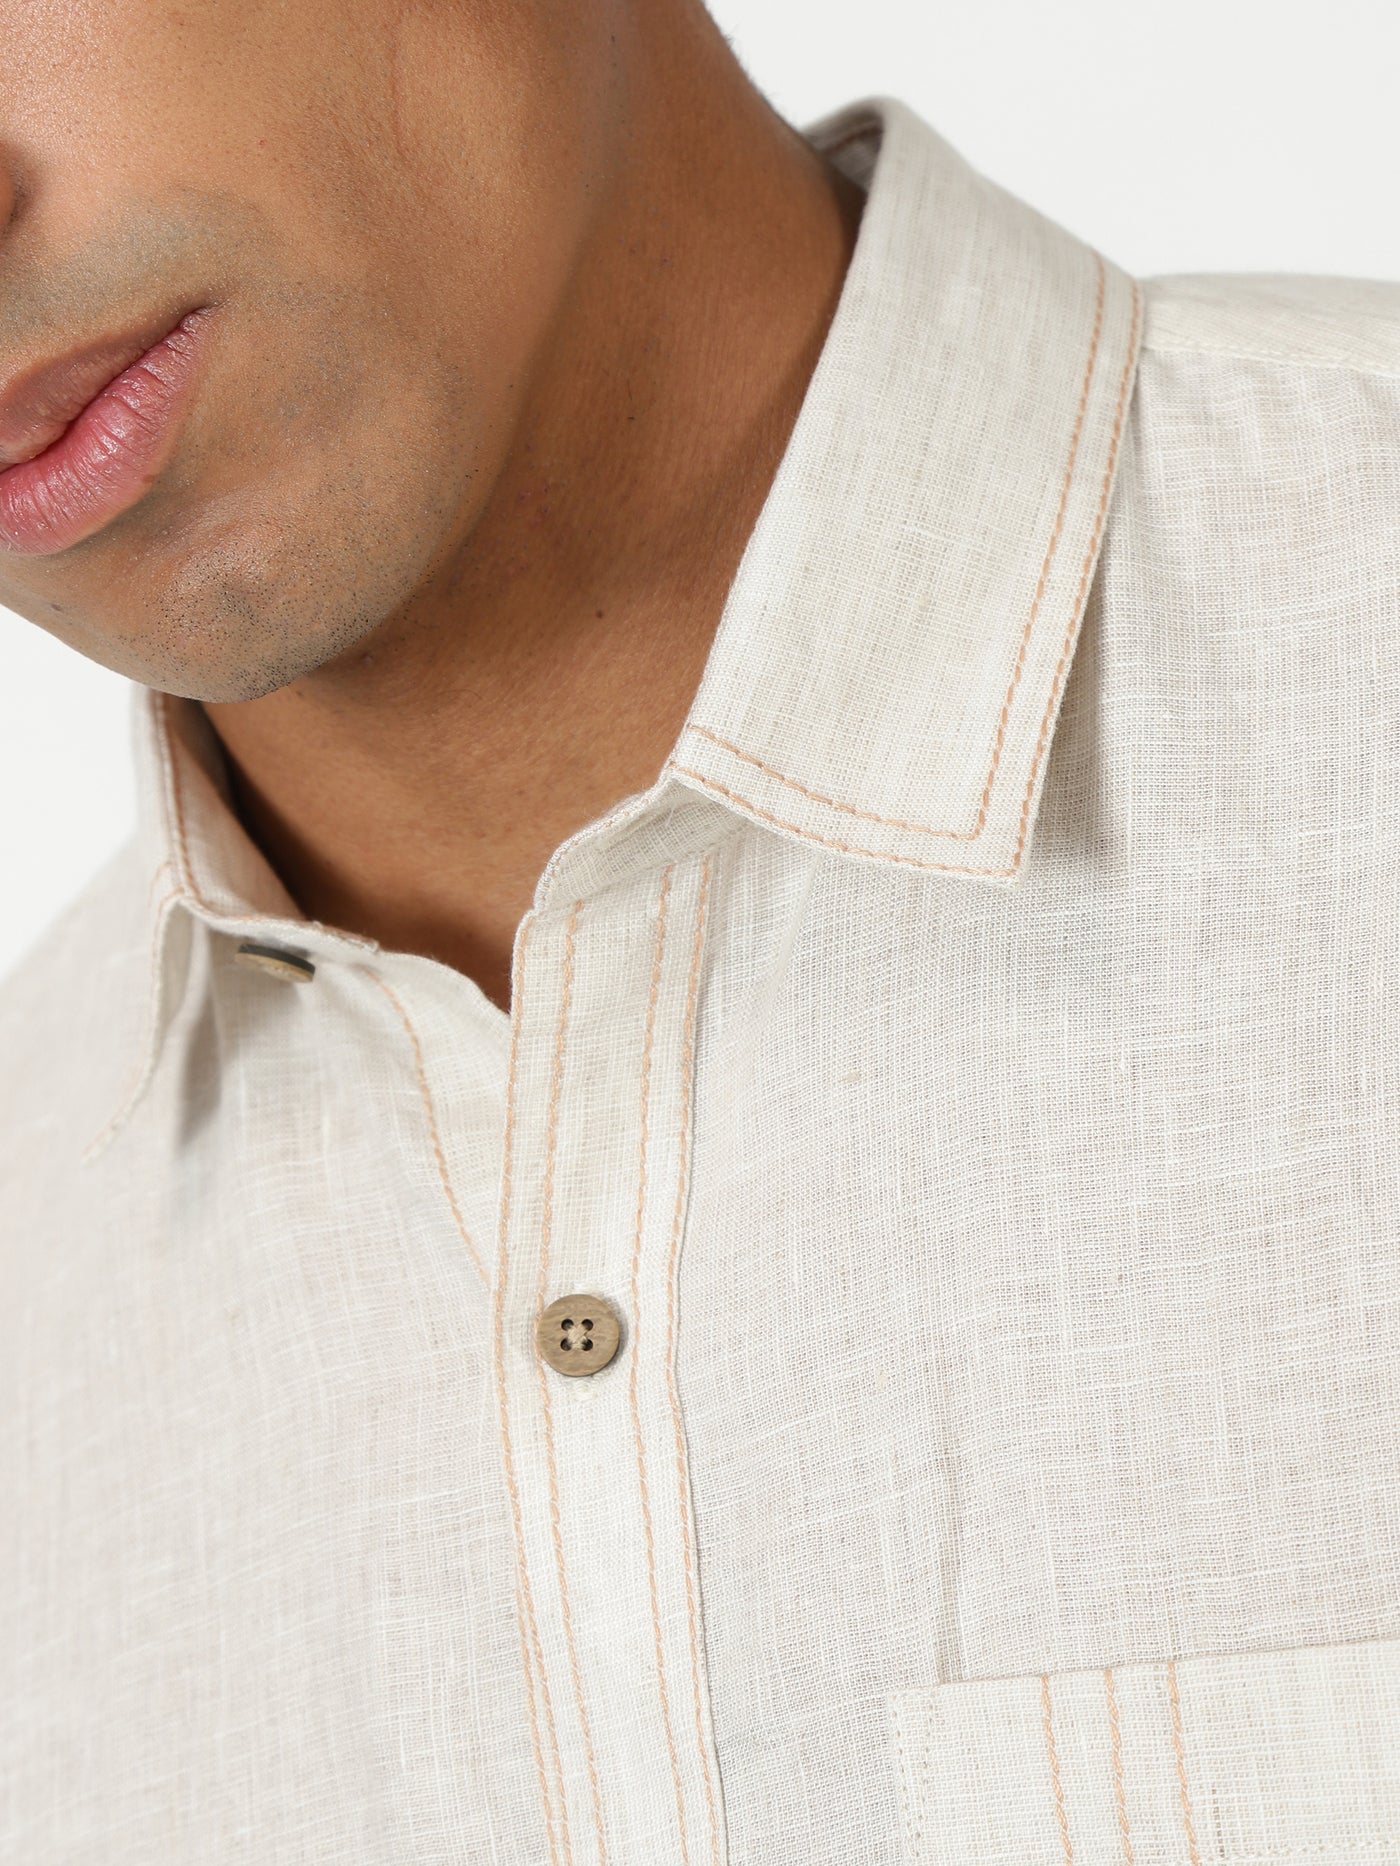 Nicola - Full Sleeve Stitch Detailed Pure Linen Shirt - Light Ecru